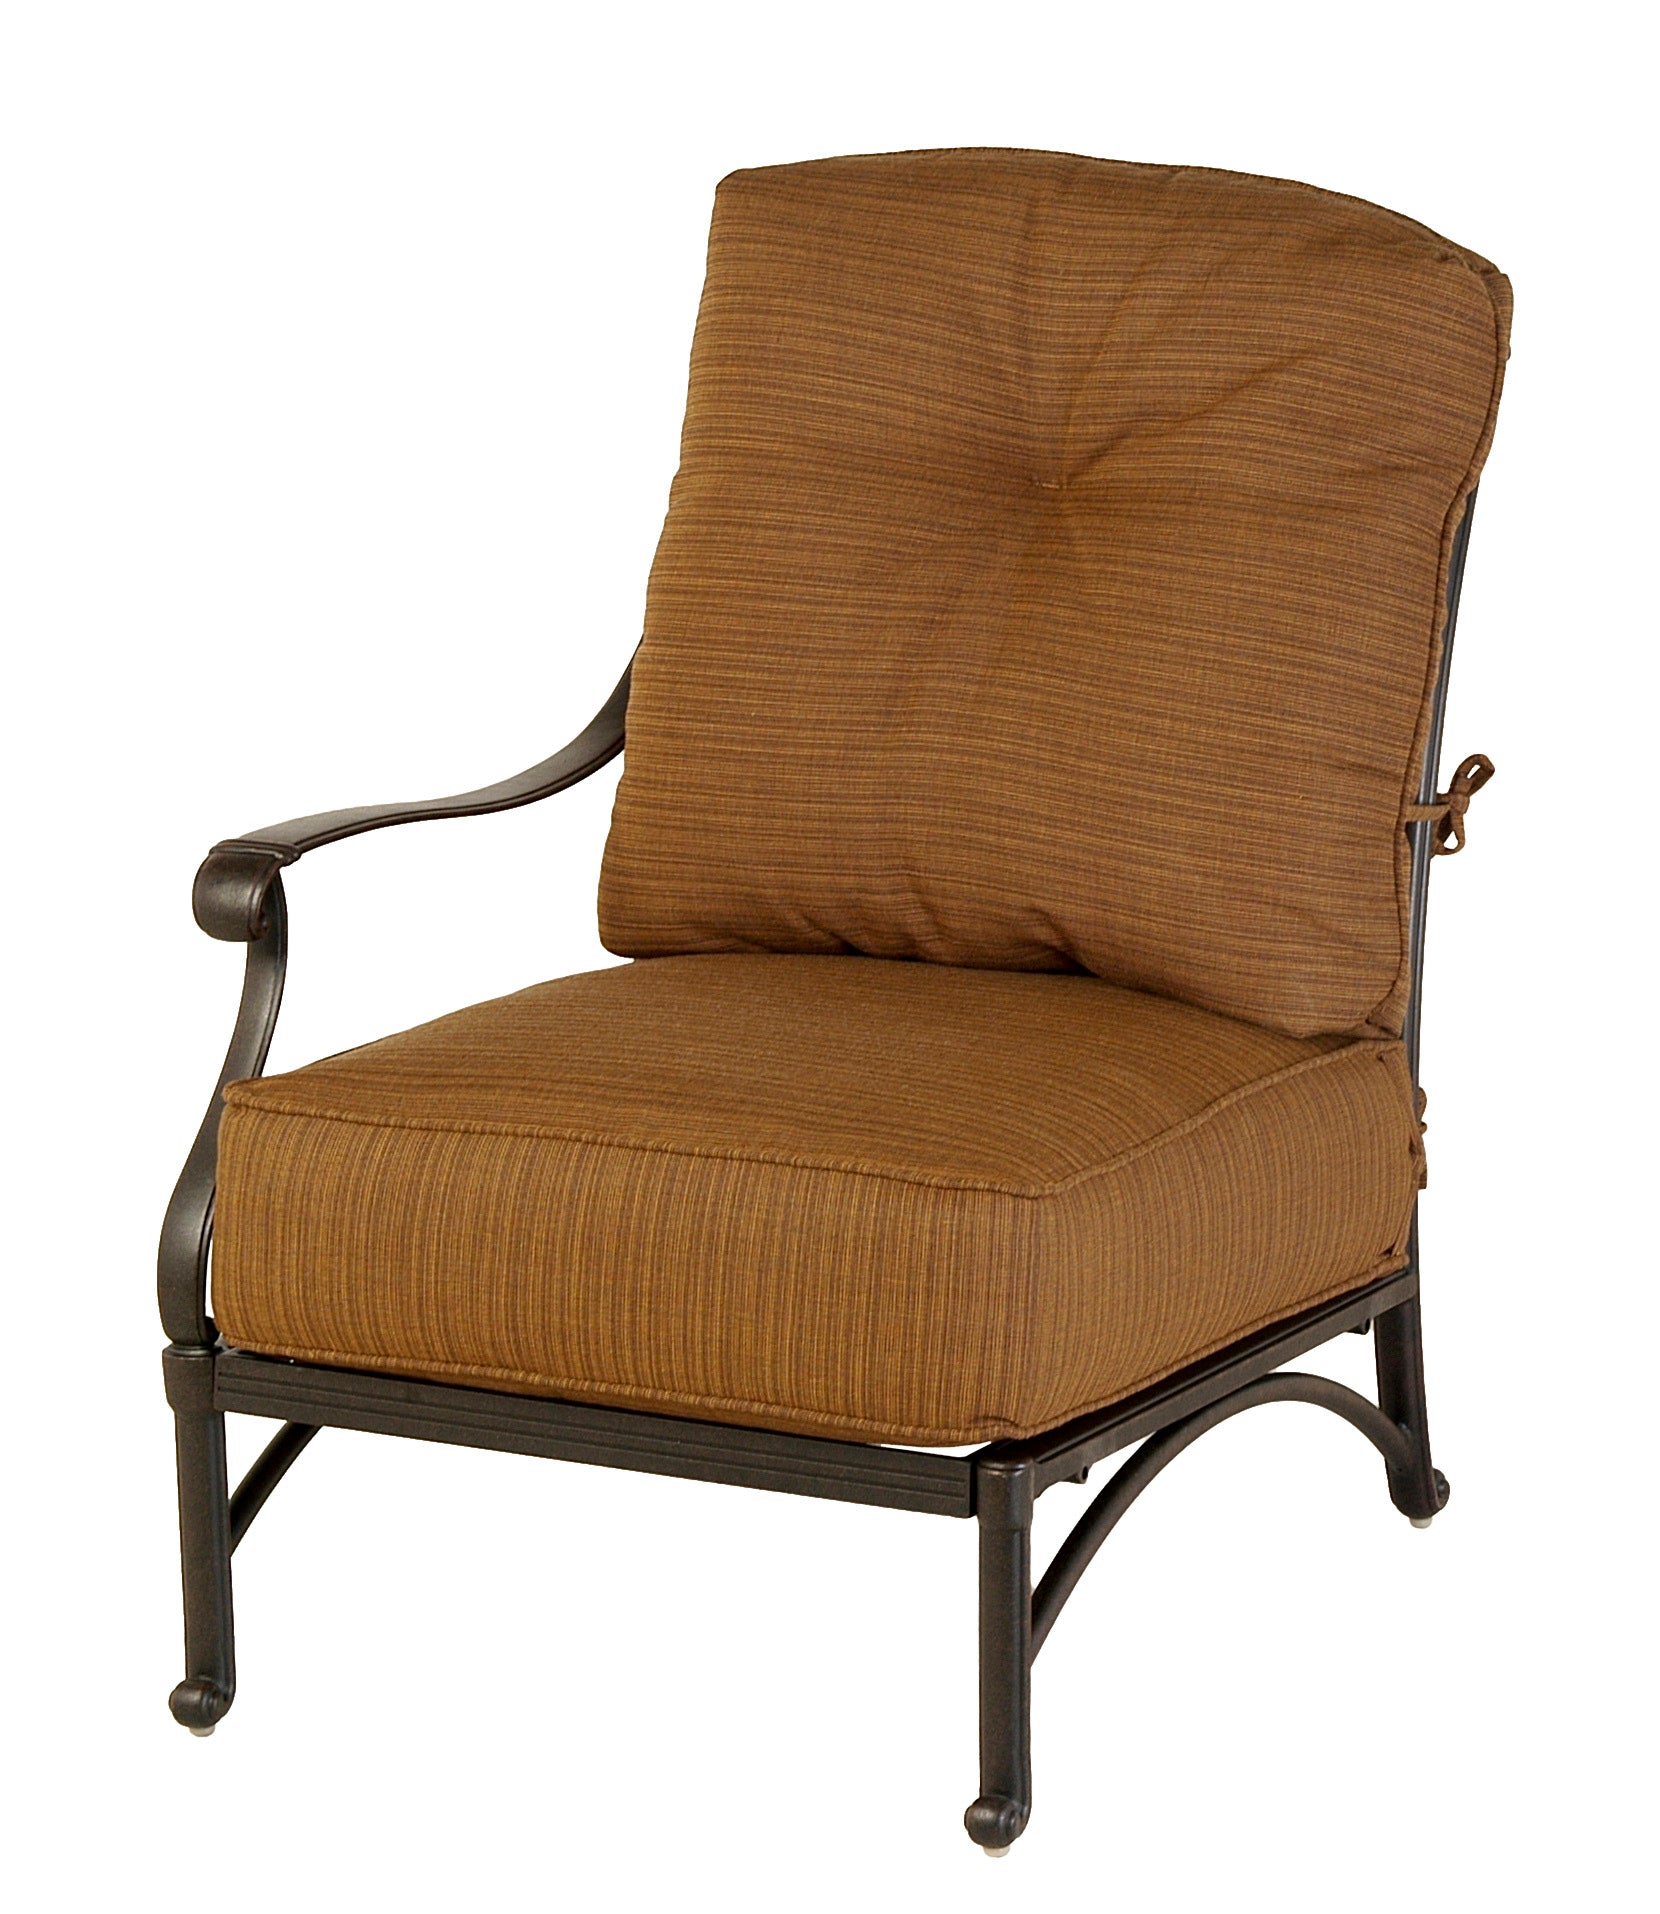 Hanamint Mayfair Estate Club Right Chair Outdoor Chairs 12026015